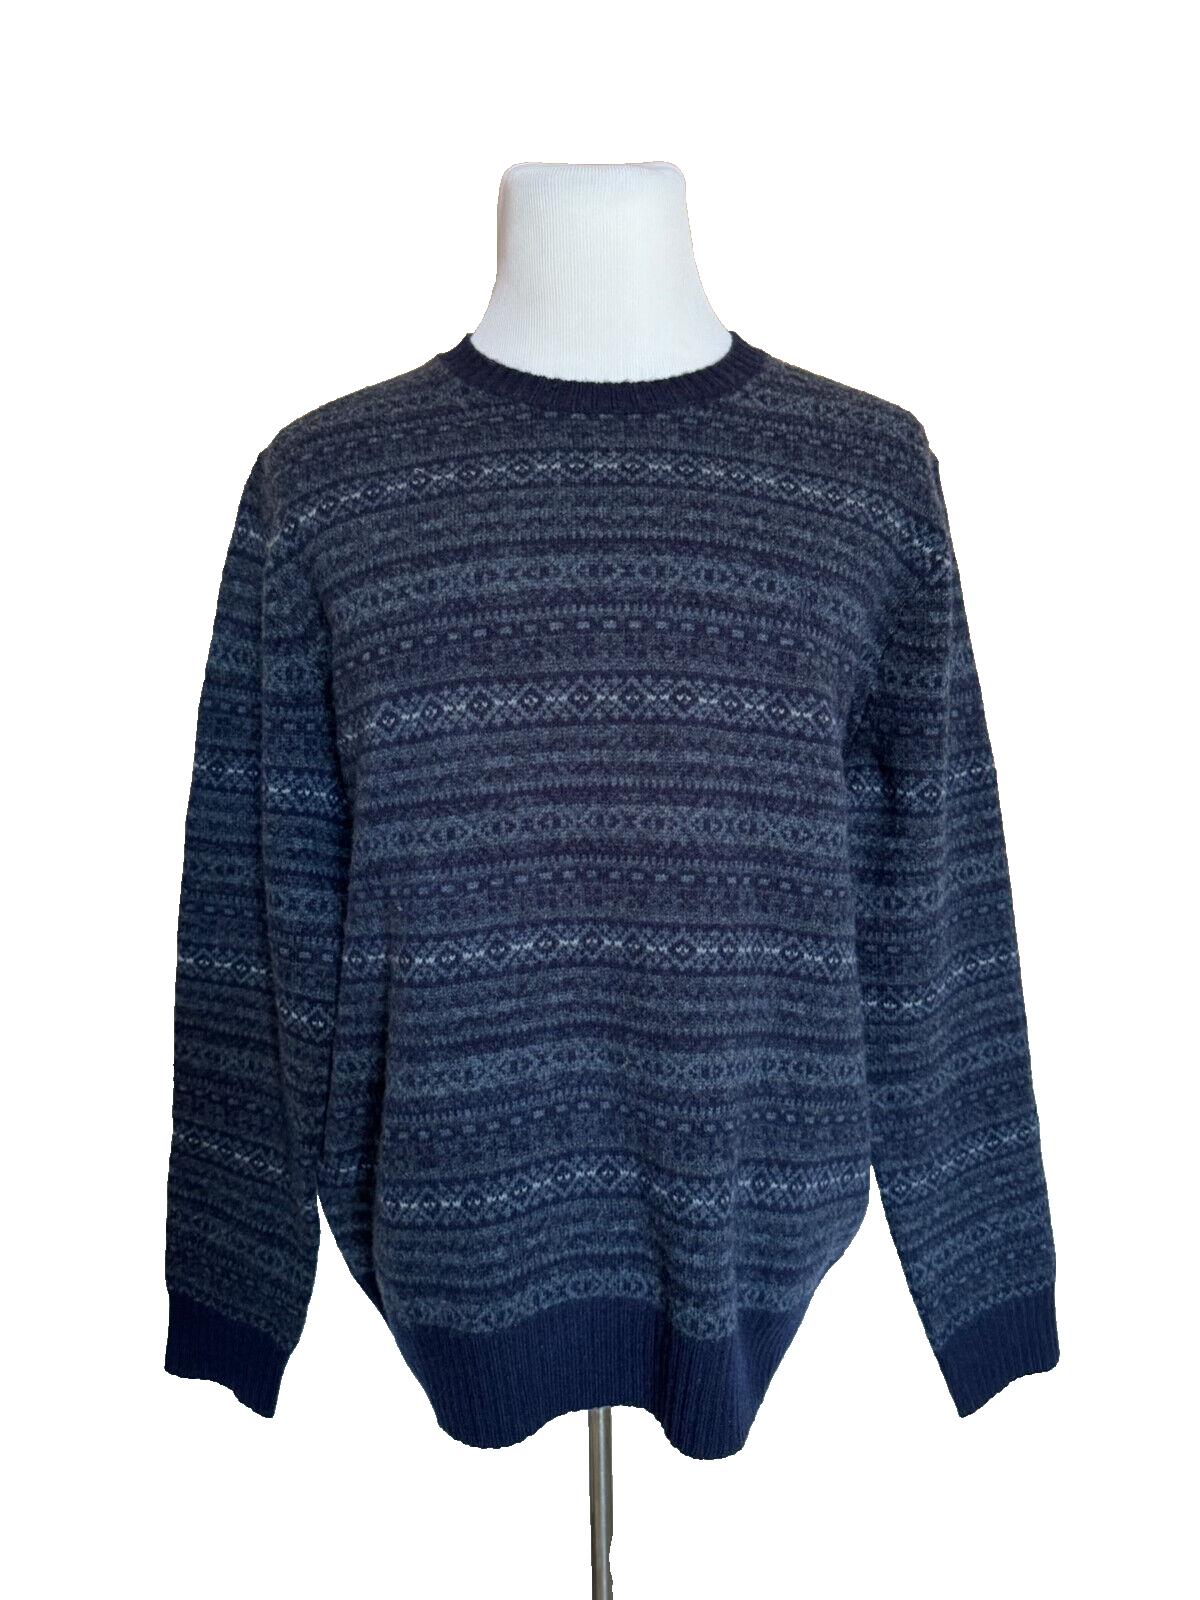 NWT $198 Polo Ralph Lauren Men's Knit Wool Alpaca Hair Sweater Blue XL